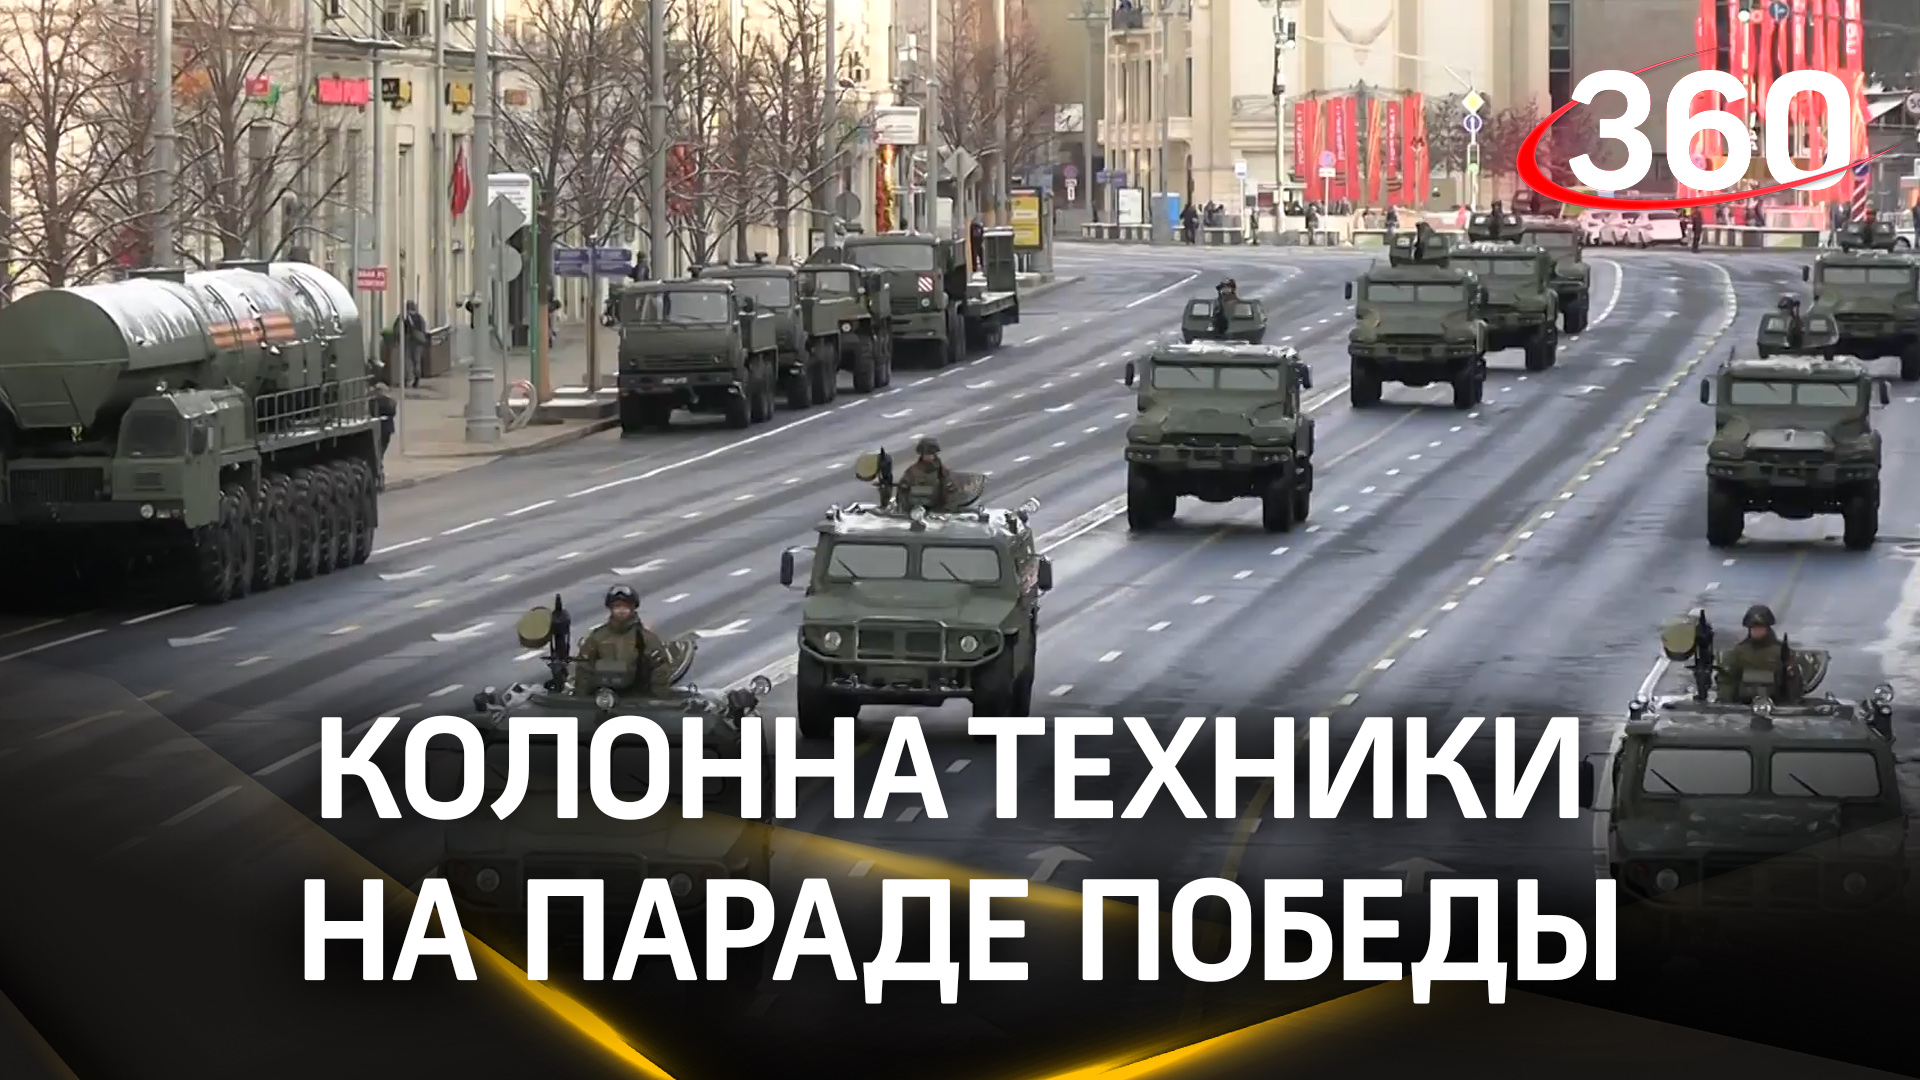 Колонна техники прибыла на Красную площадь перед парадом Победы